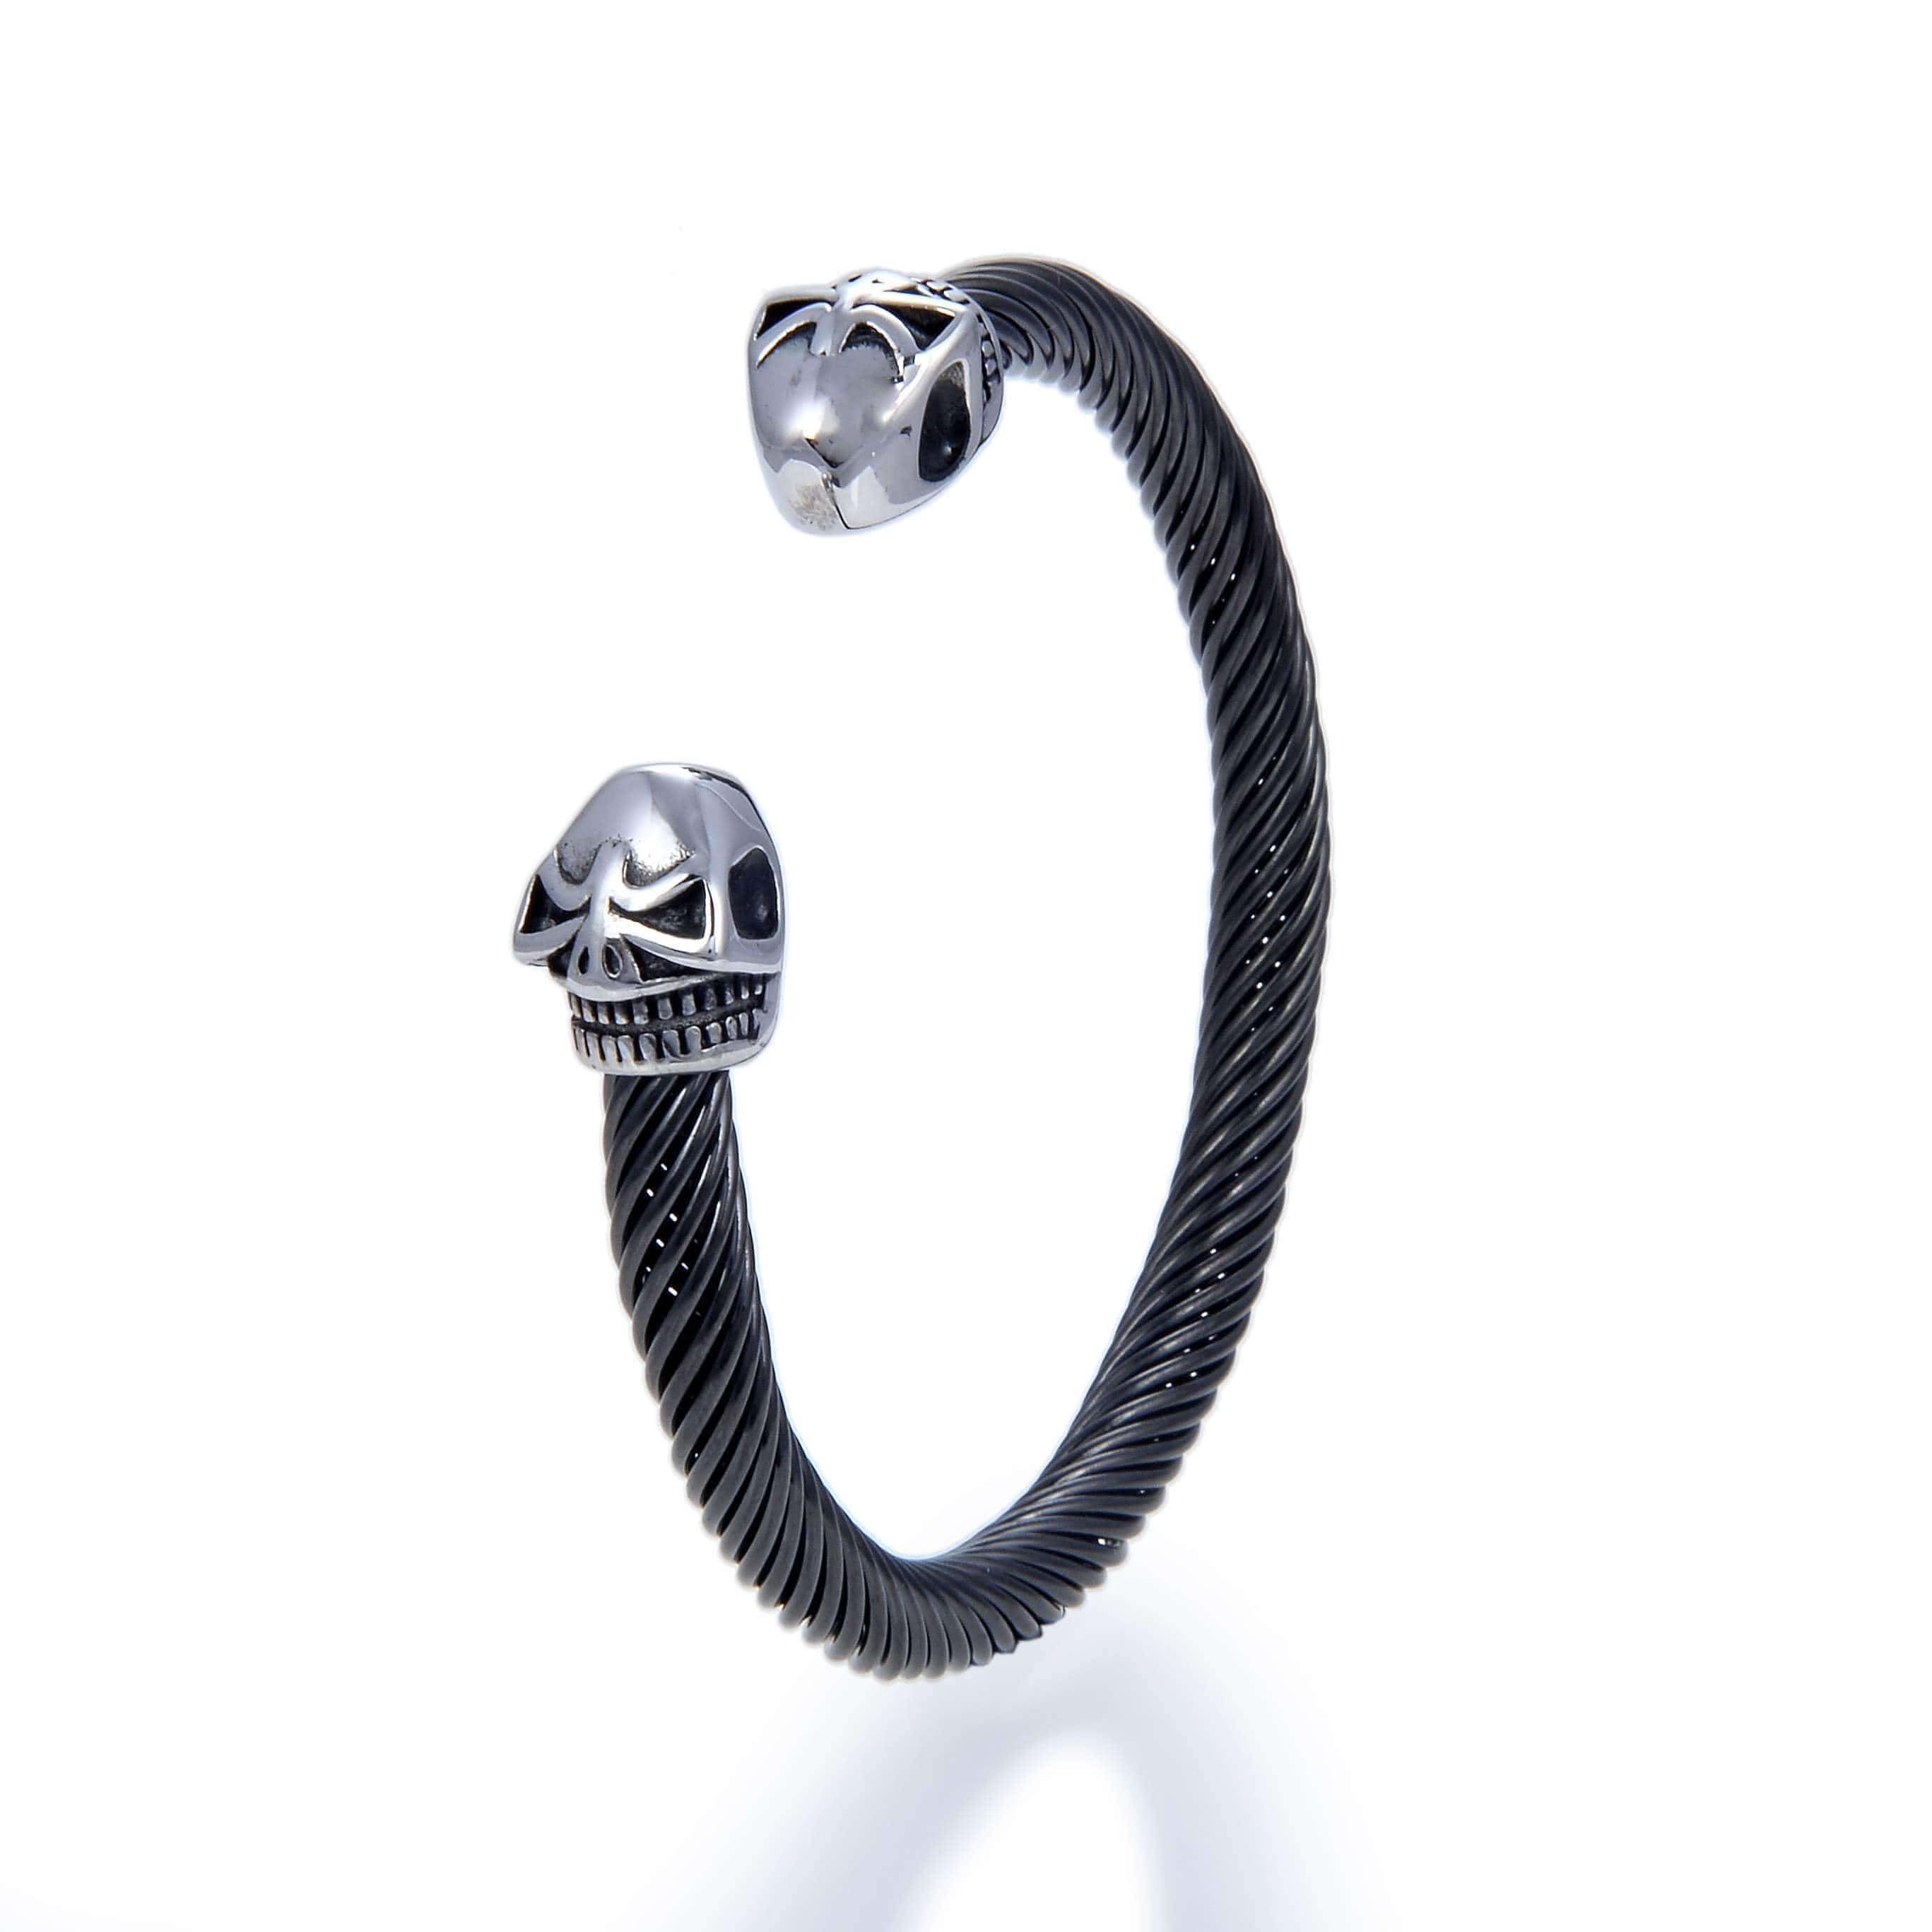 Kalifano Steel Hearts Jewelry Steel Hearts Black Rope Chain Pointed Skull Tip Open Bangle Bracelet SHB200-58